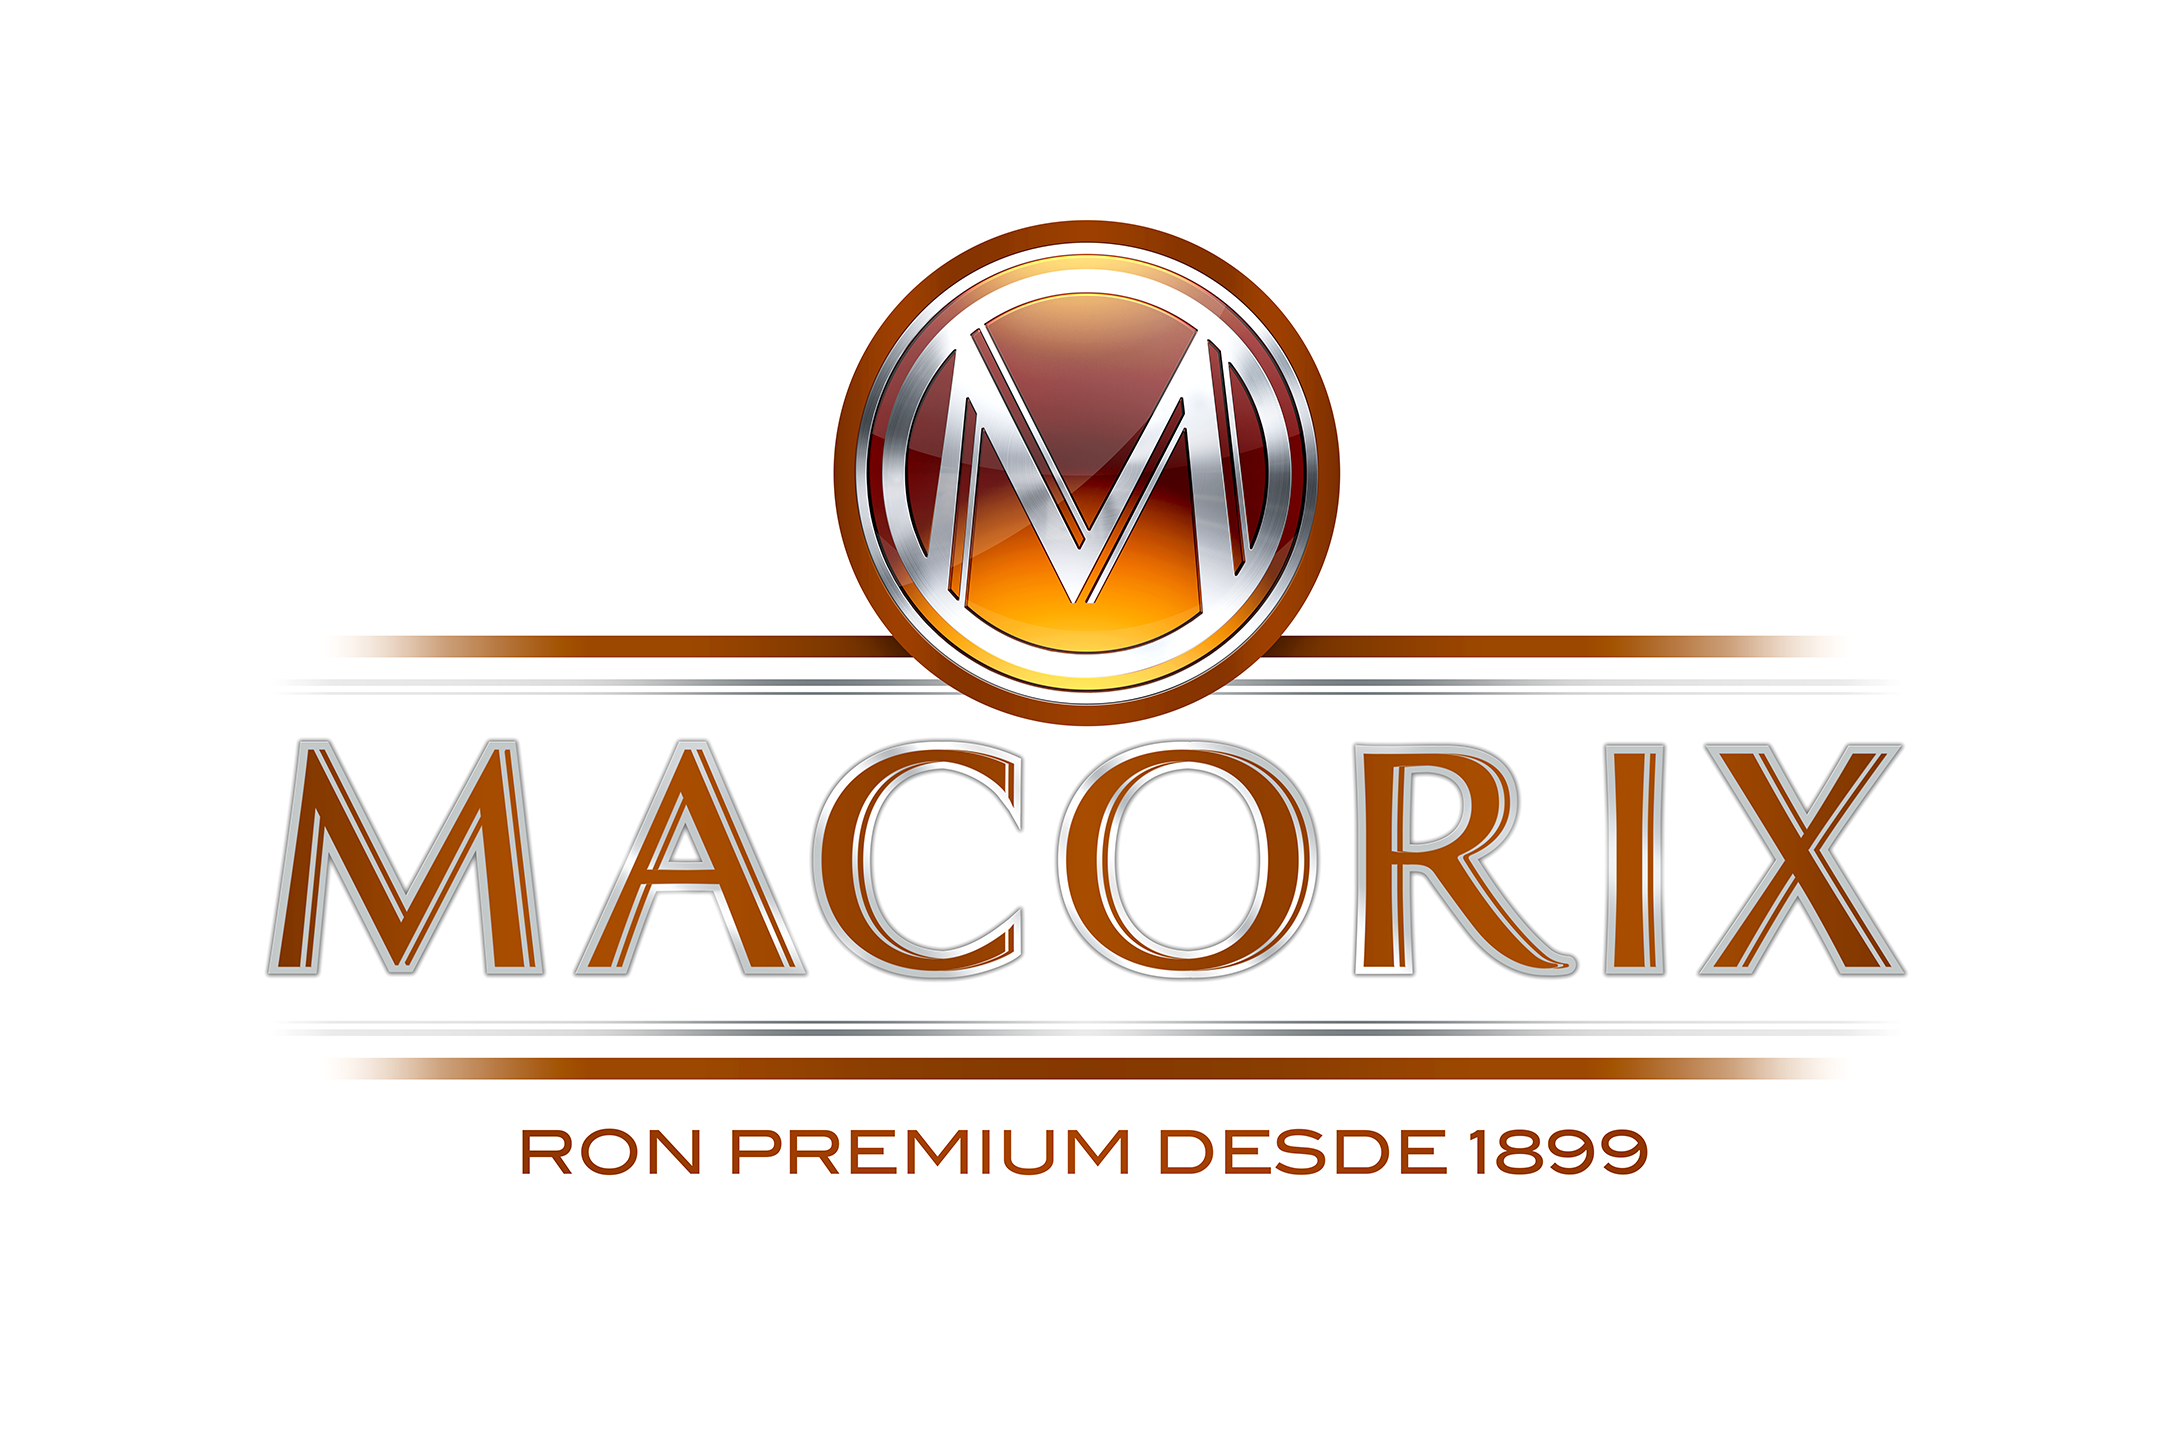 Macorix